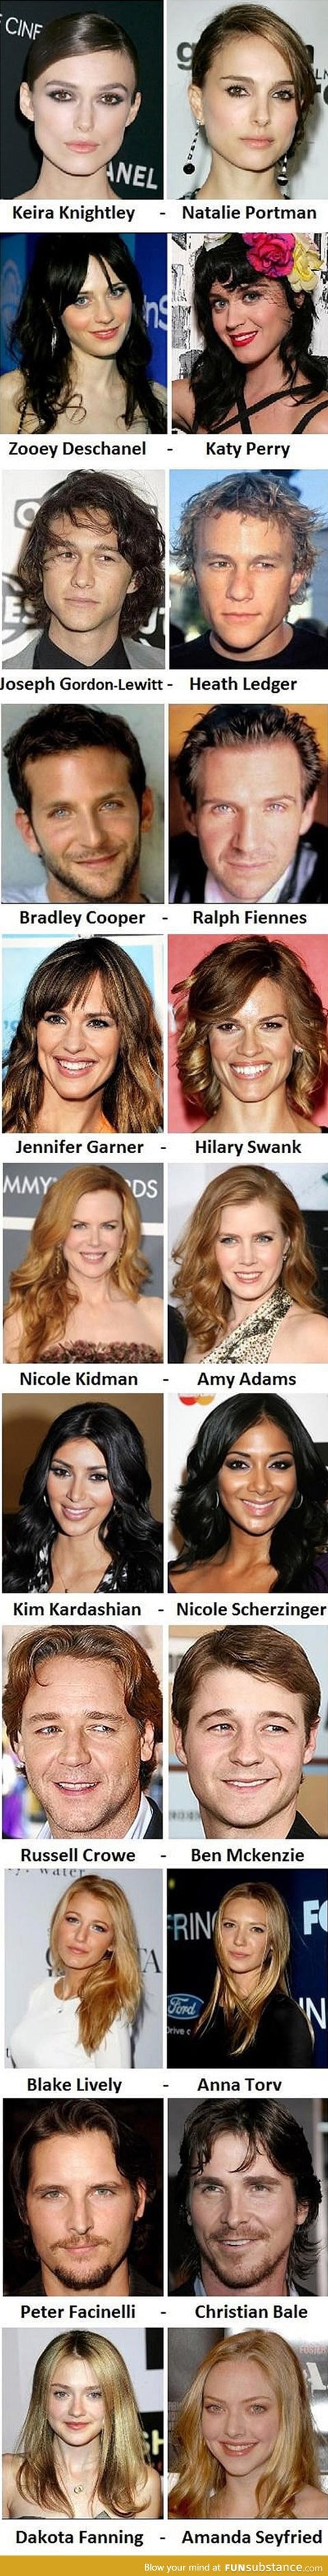 Celebrities that look alike